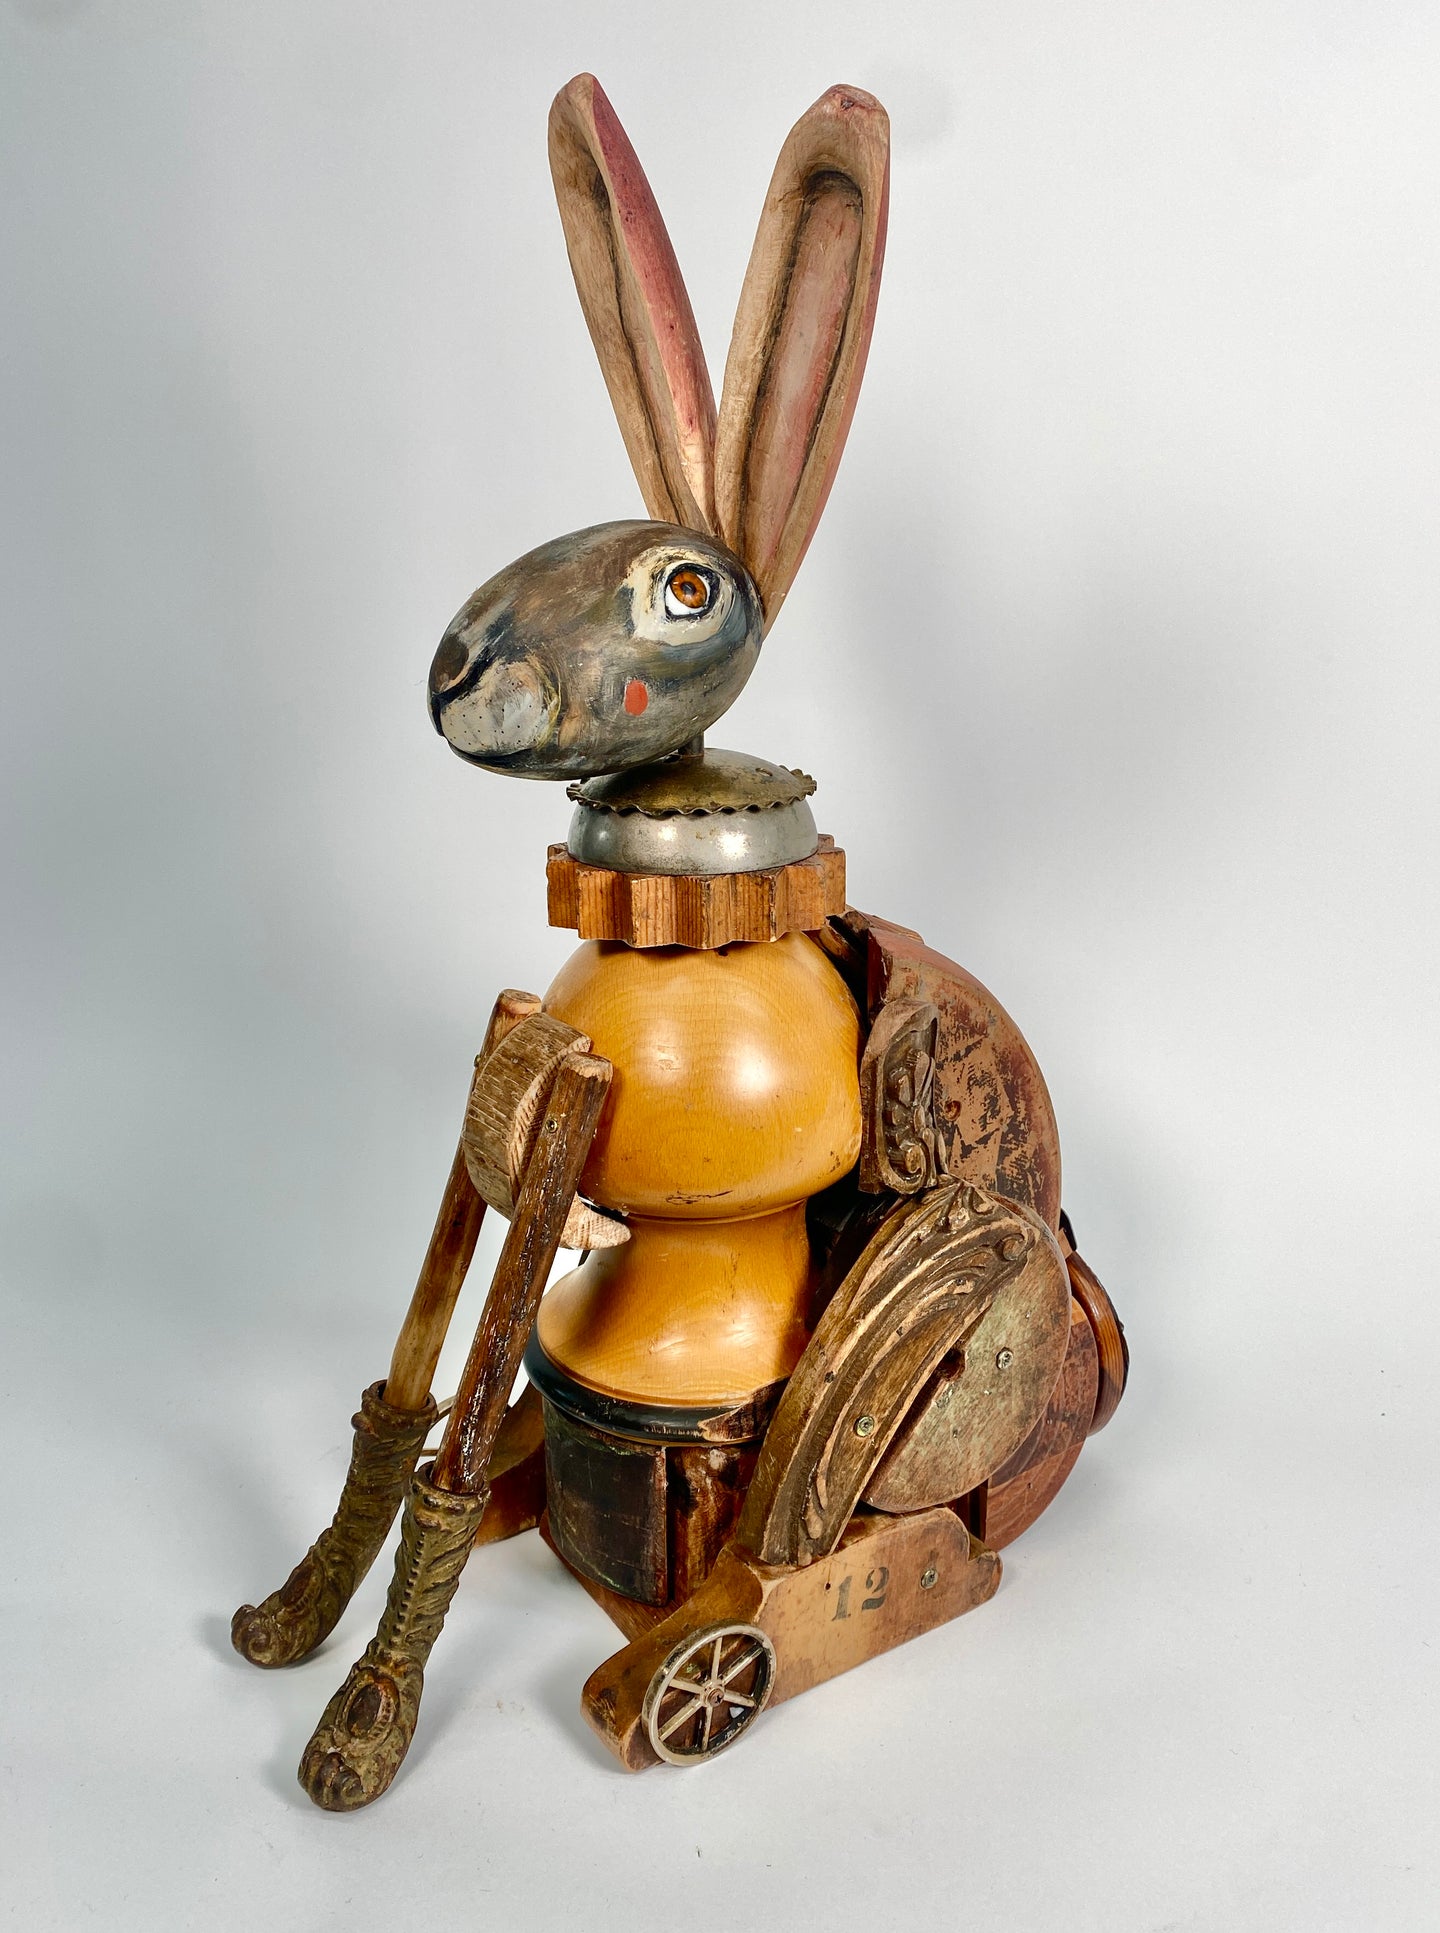 82. Assemblage Rabbit